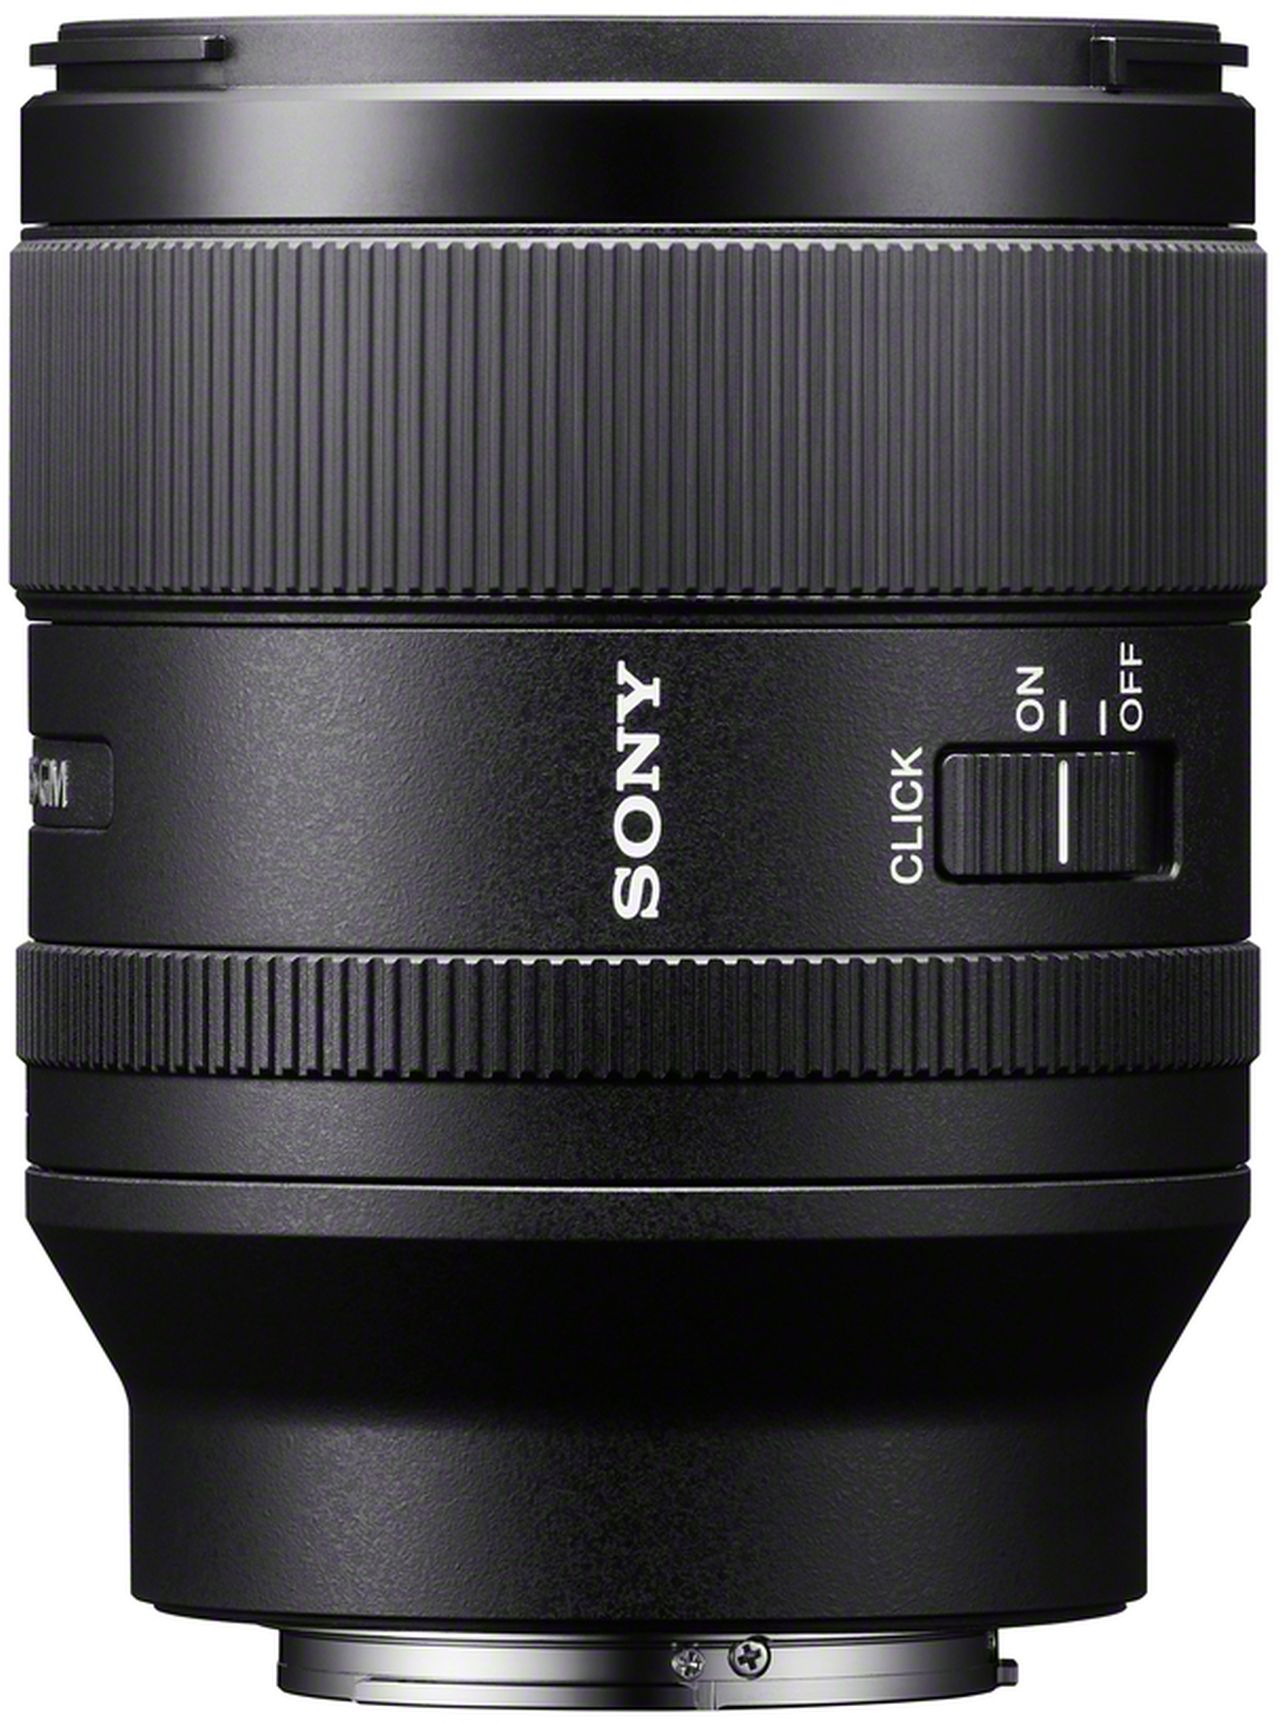 Sony SEL FE 35mm f1.4 GM - Foto Erhardt